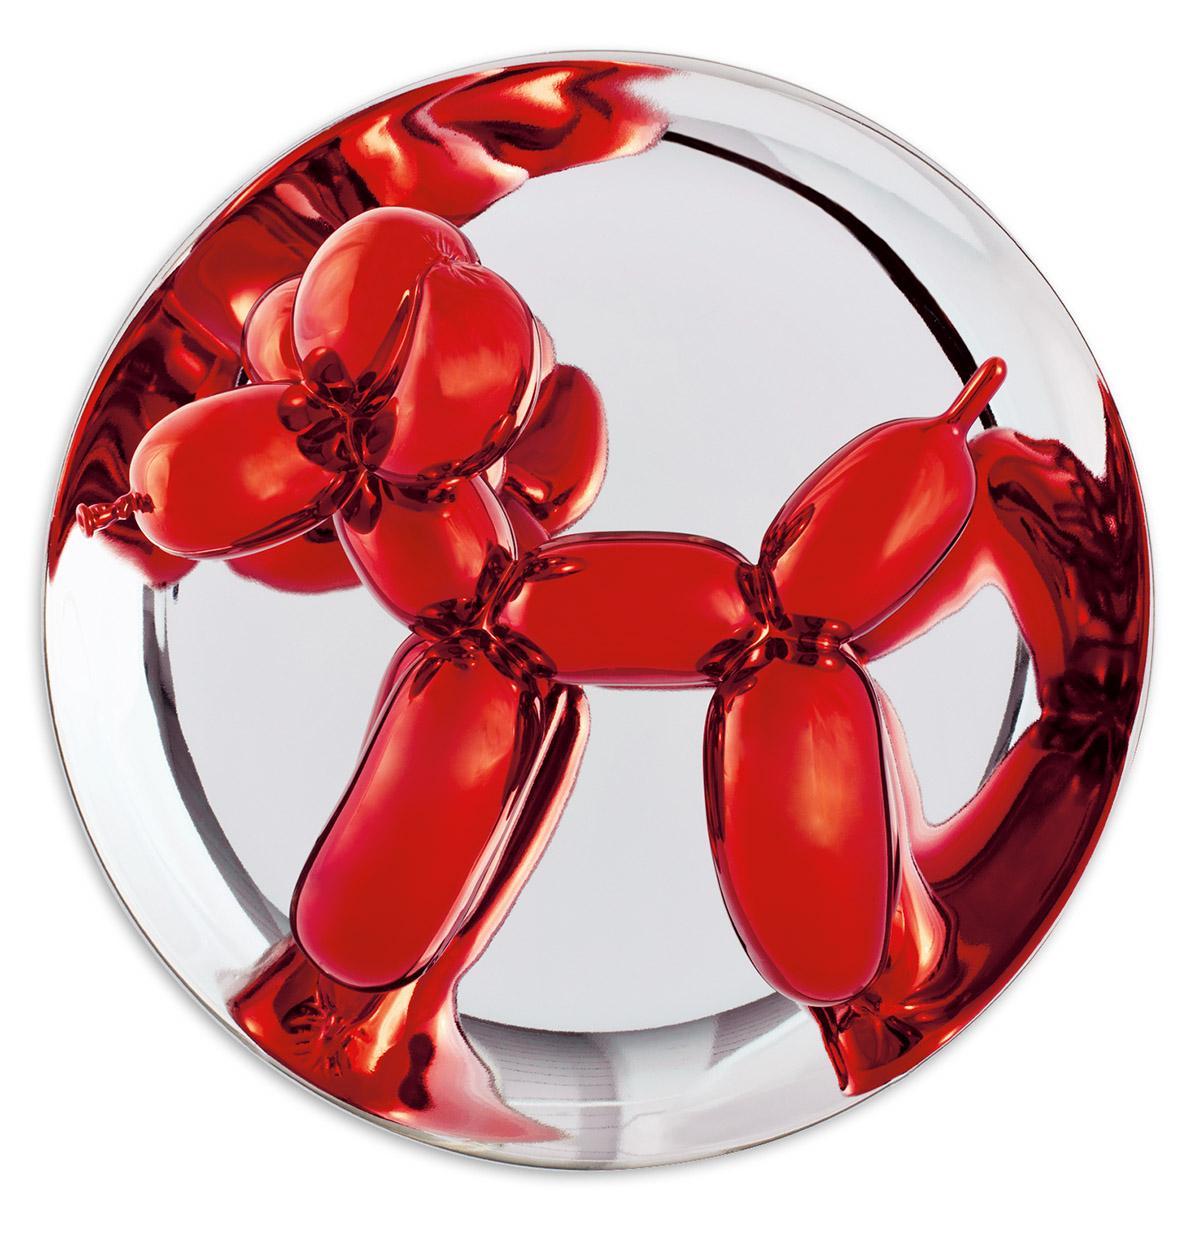 Jeff Koons Print - Balloon Dog (Red)